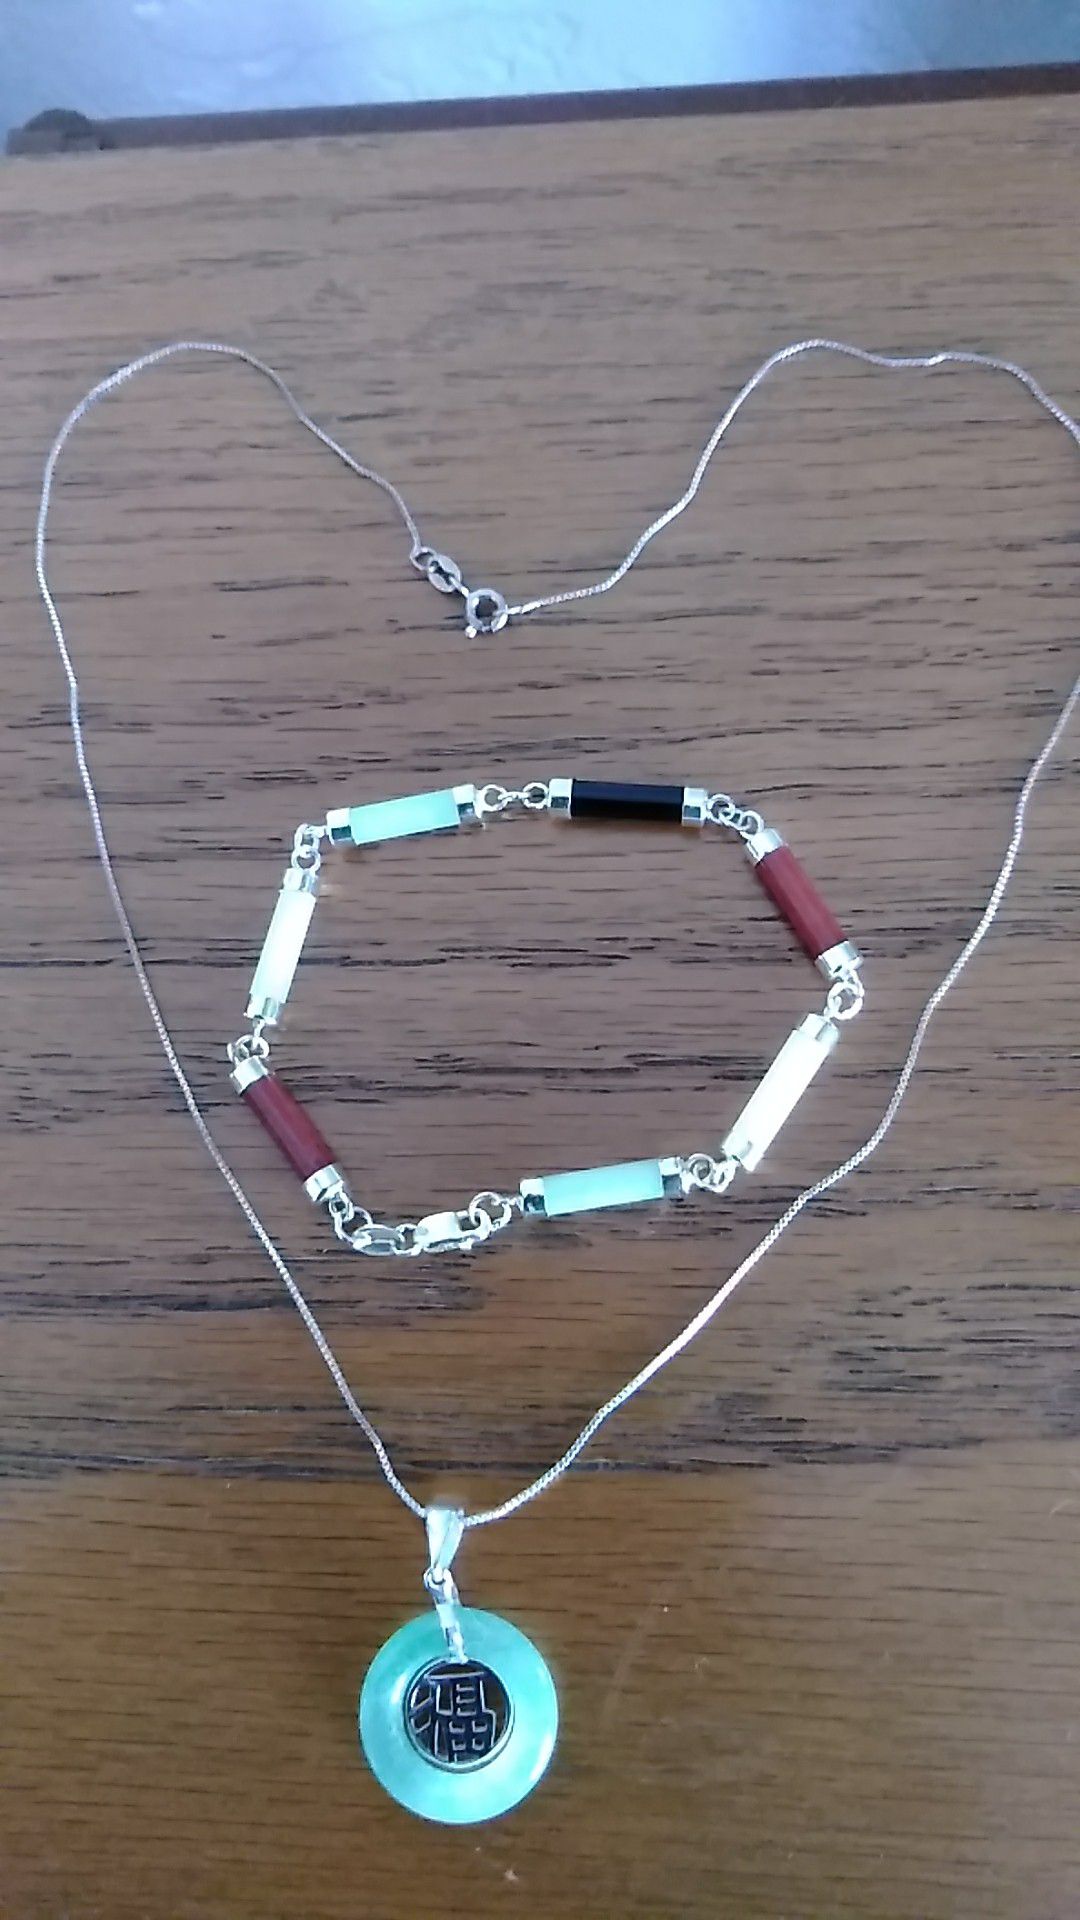 Woman's necklace and bracelet Vernon necklace in bracelet